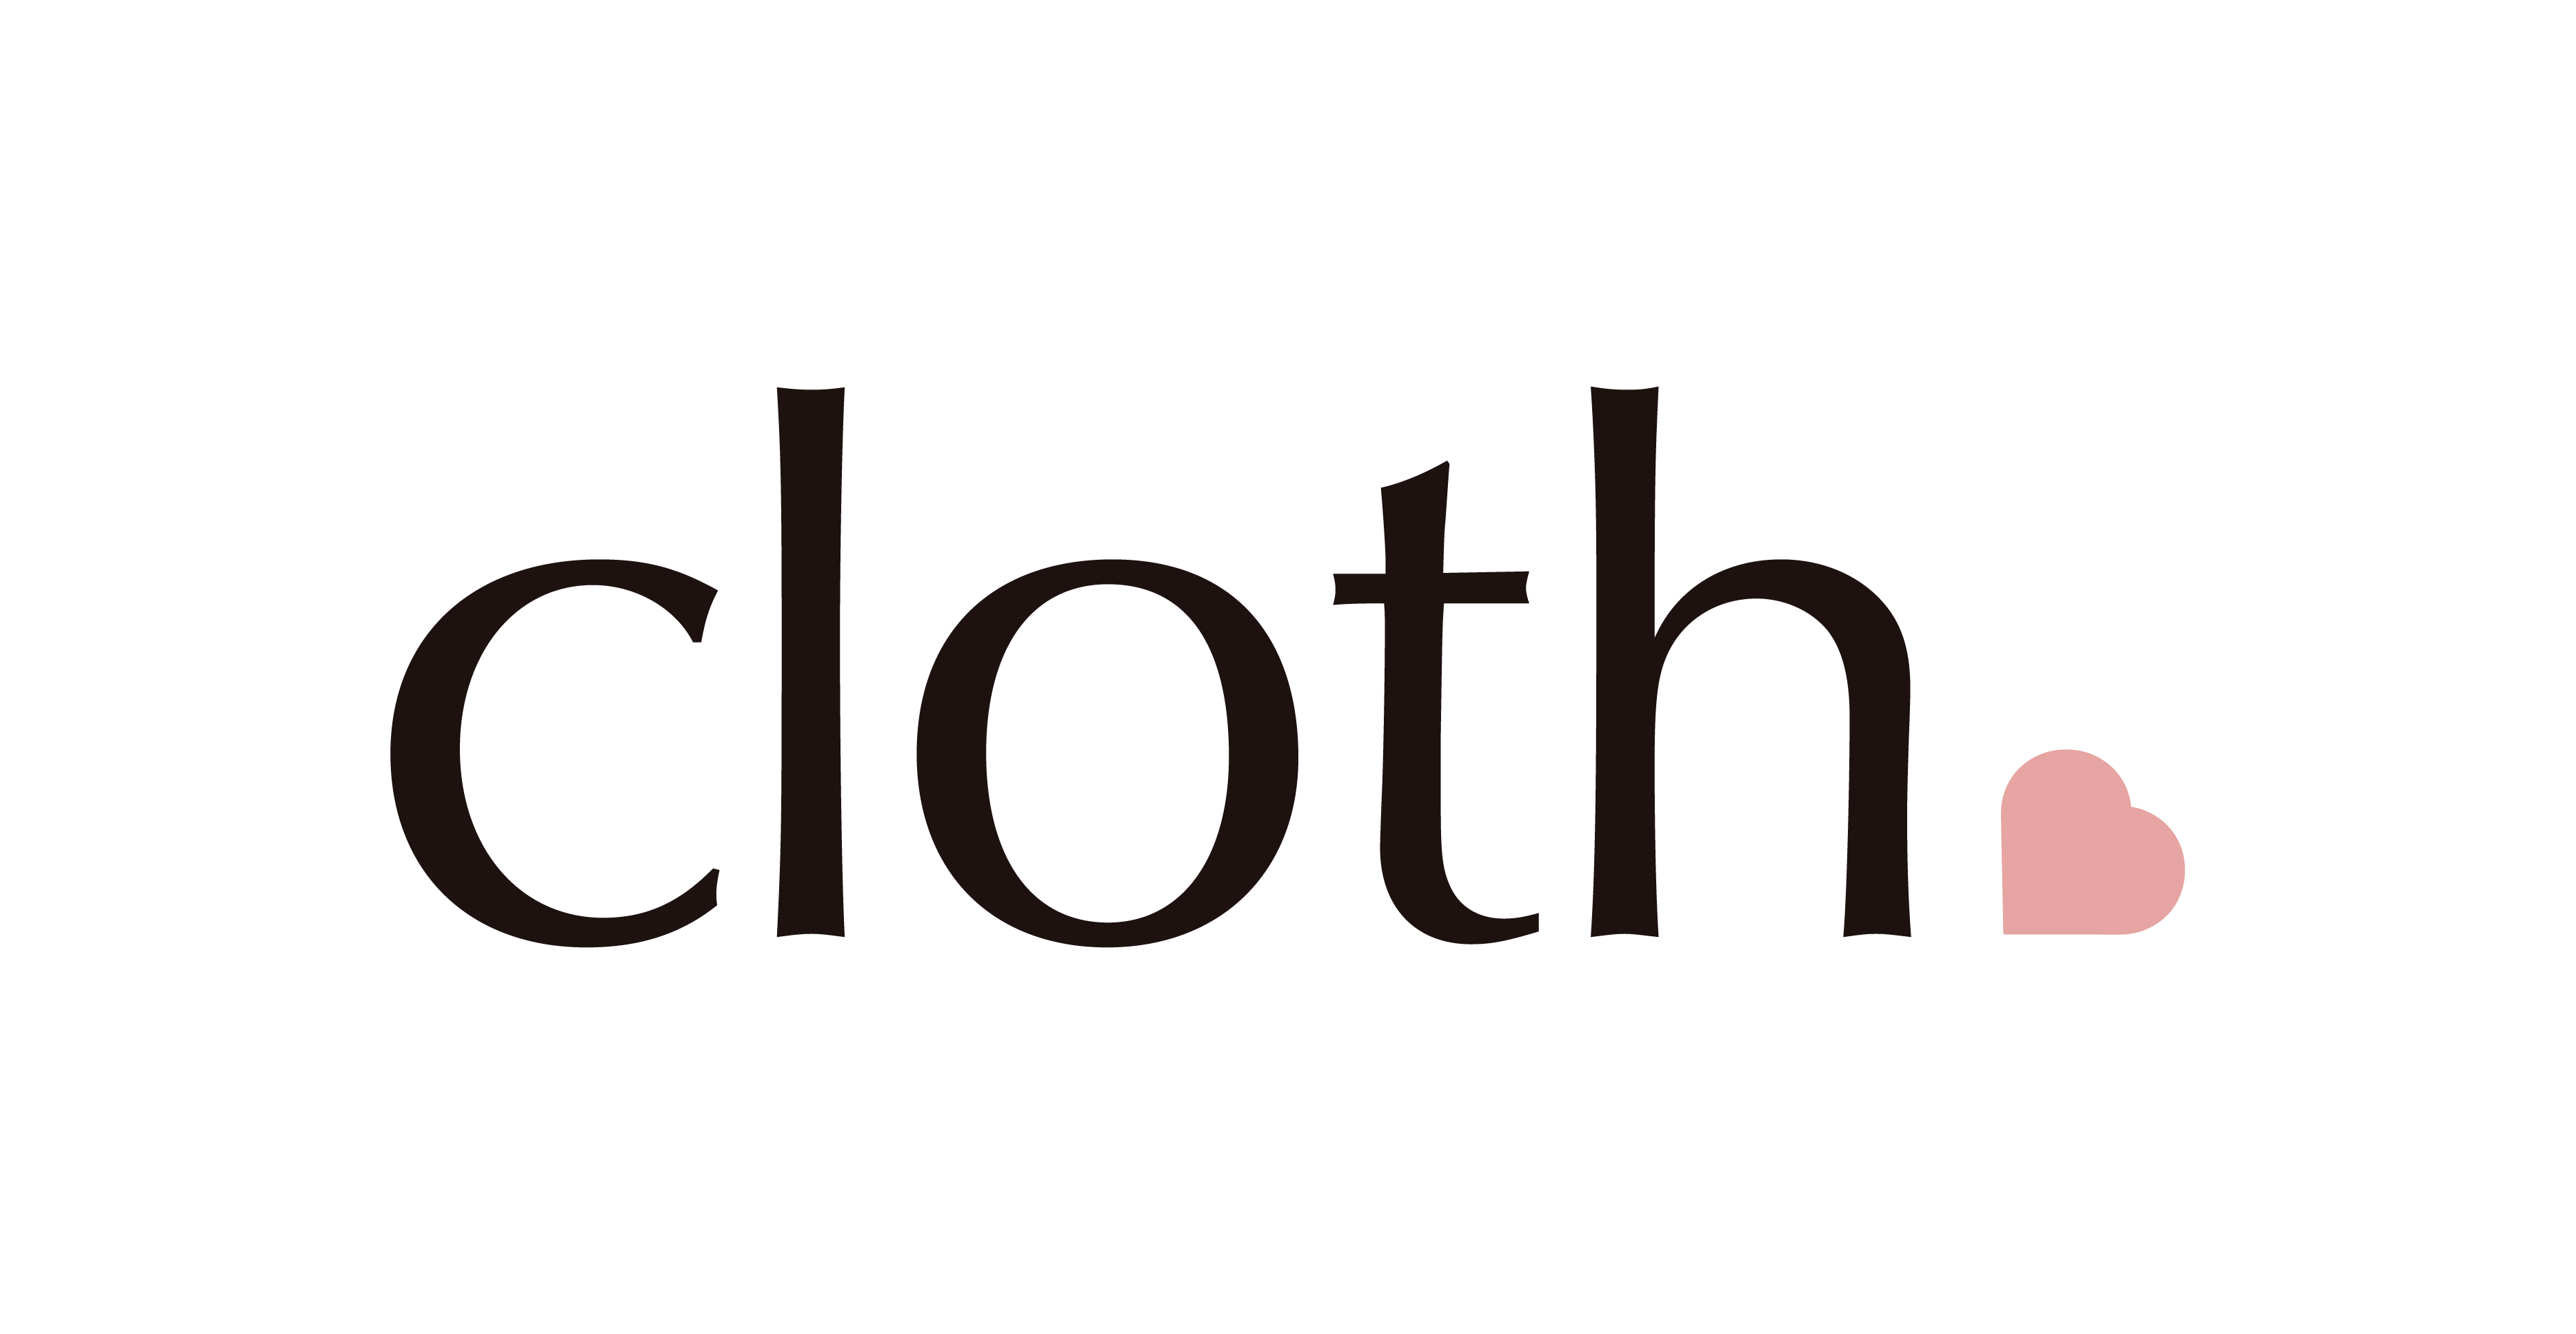 Cloth